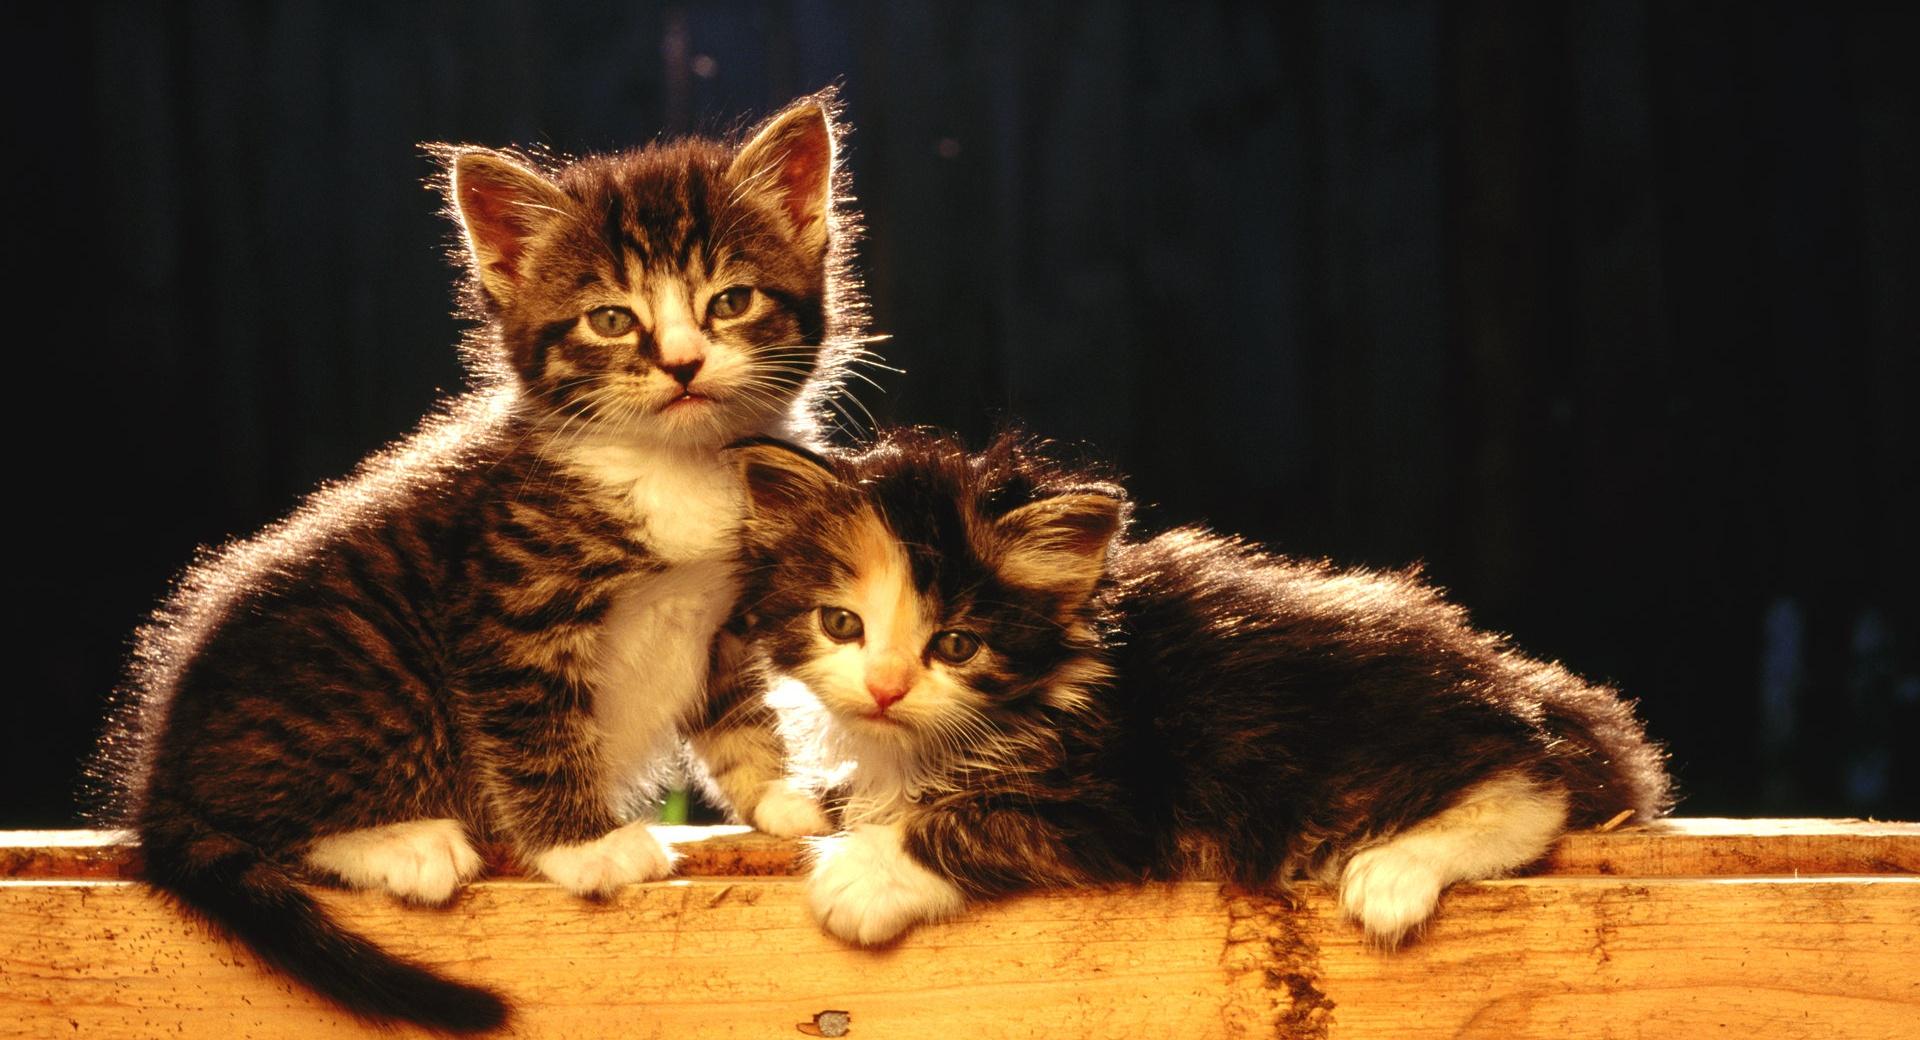 Cute Newborn Kittens at 1280 x 960 size wallpapers HD quality